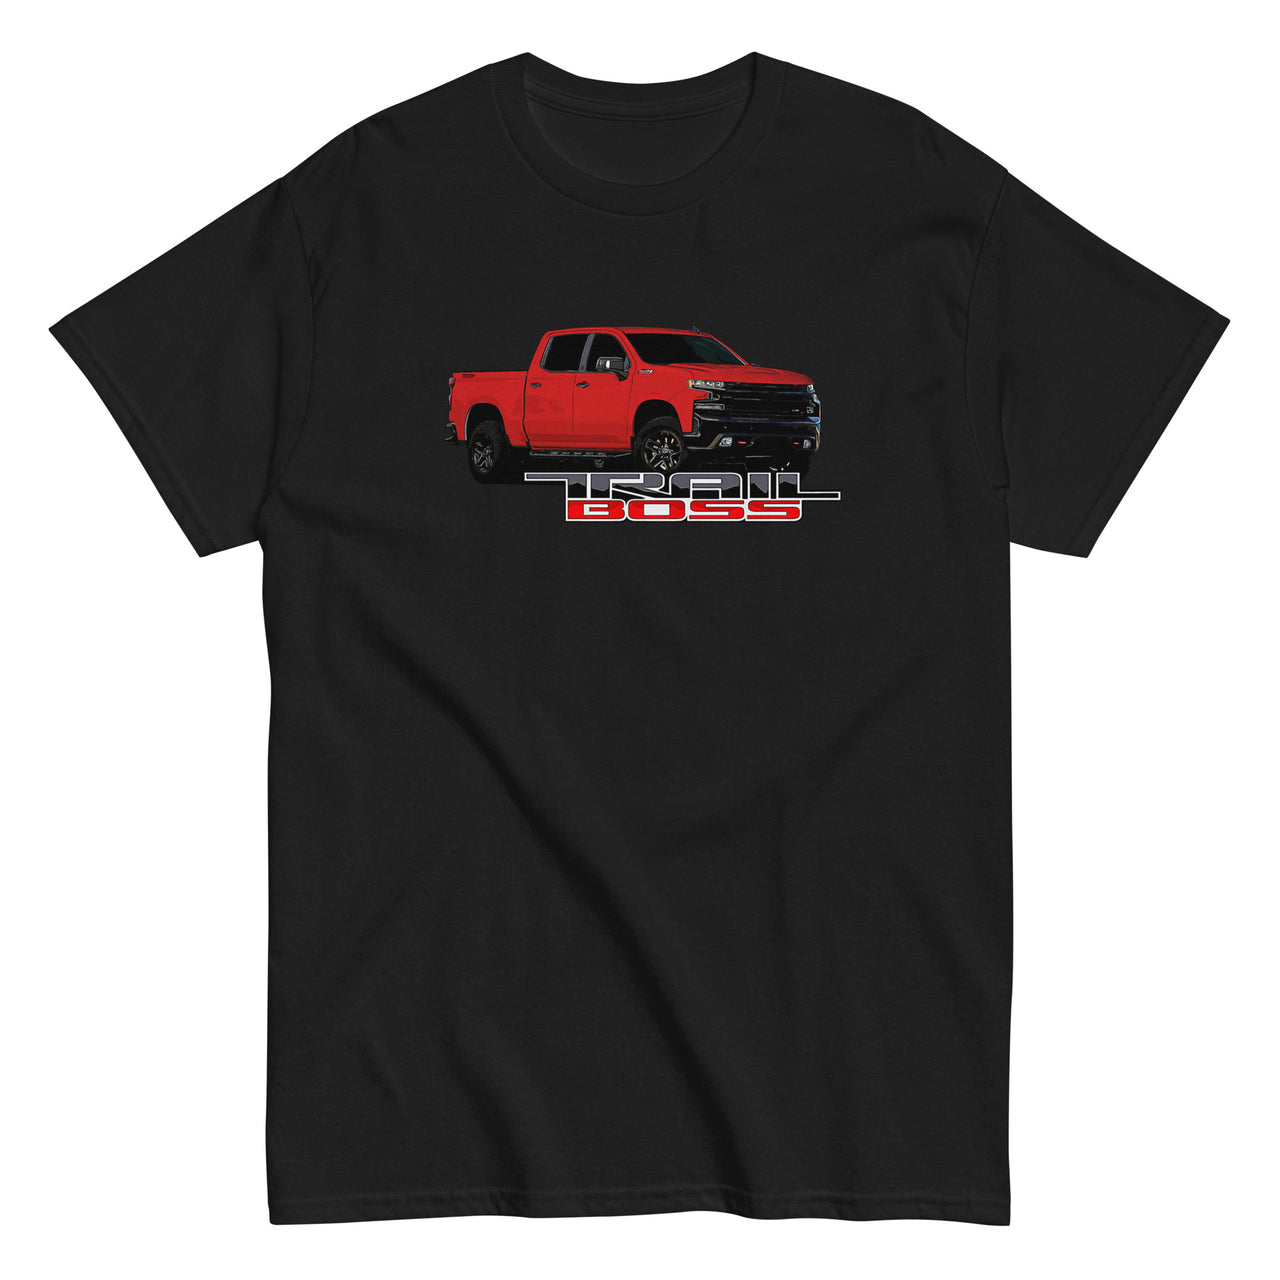 Red Trail Boss Truck T-Shirt in black